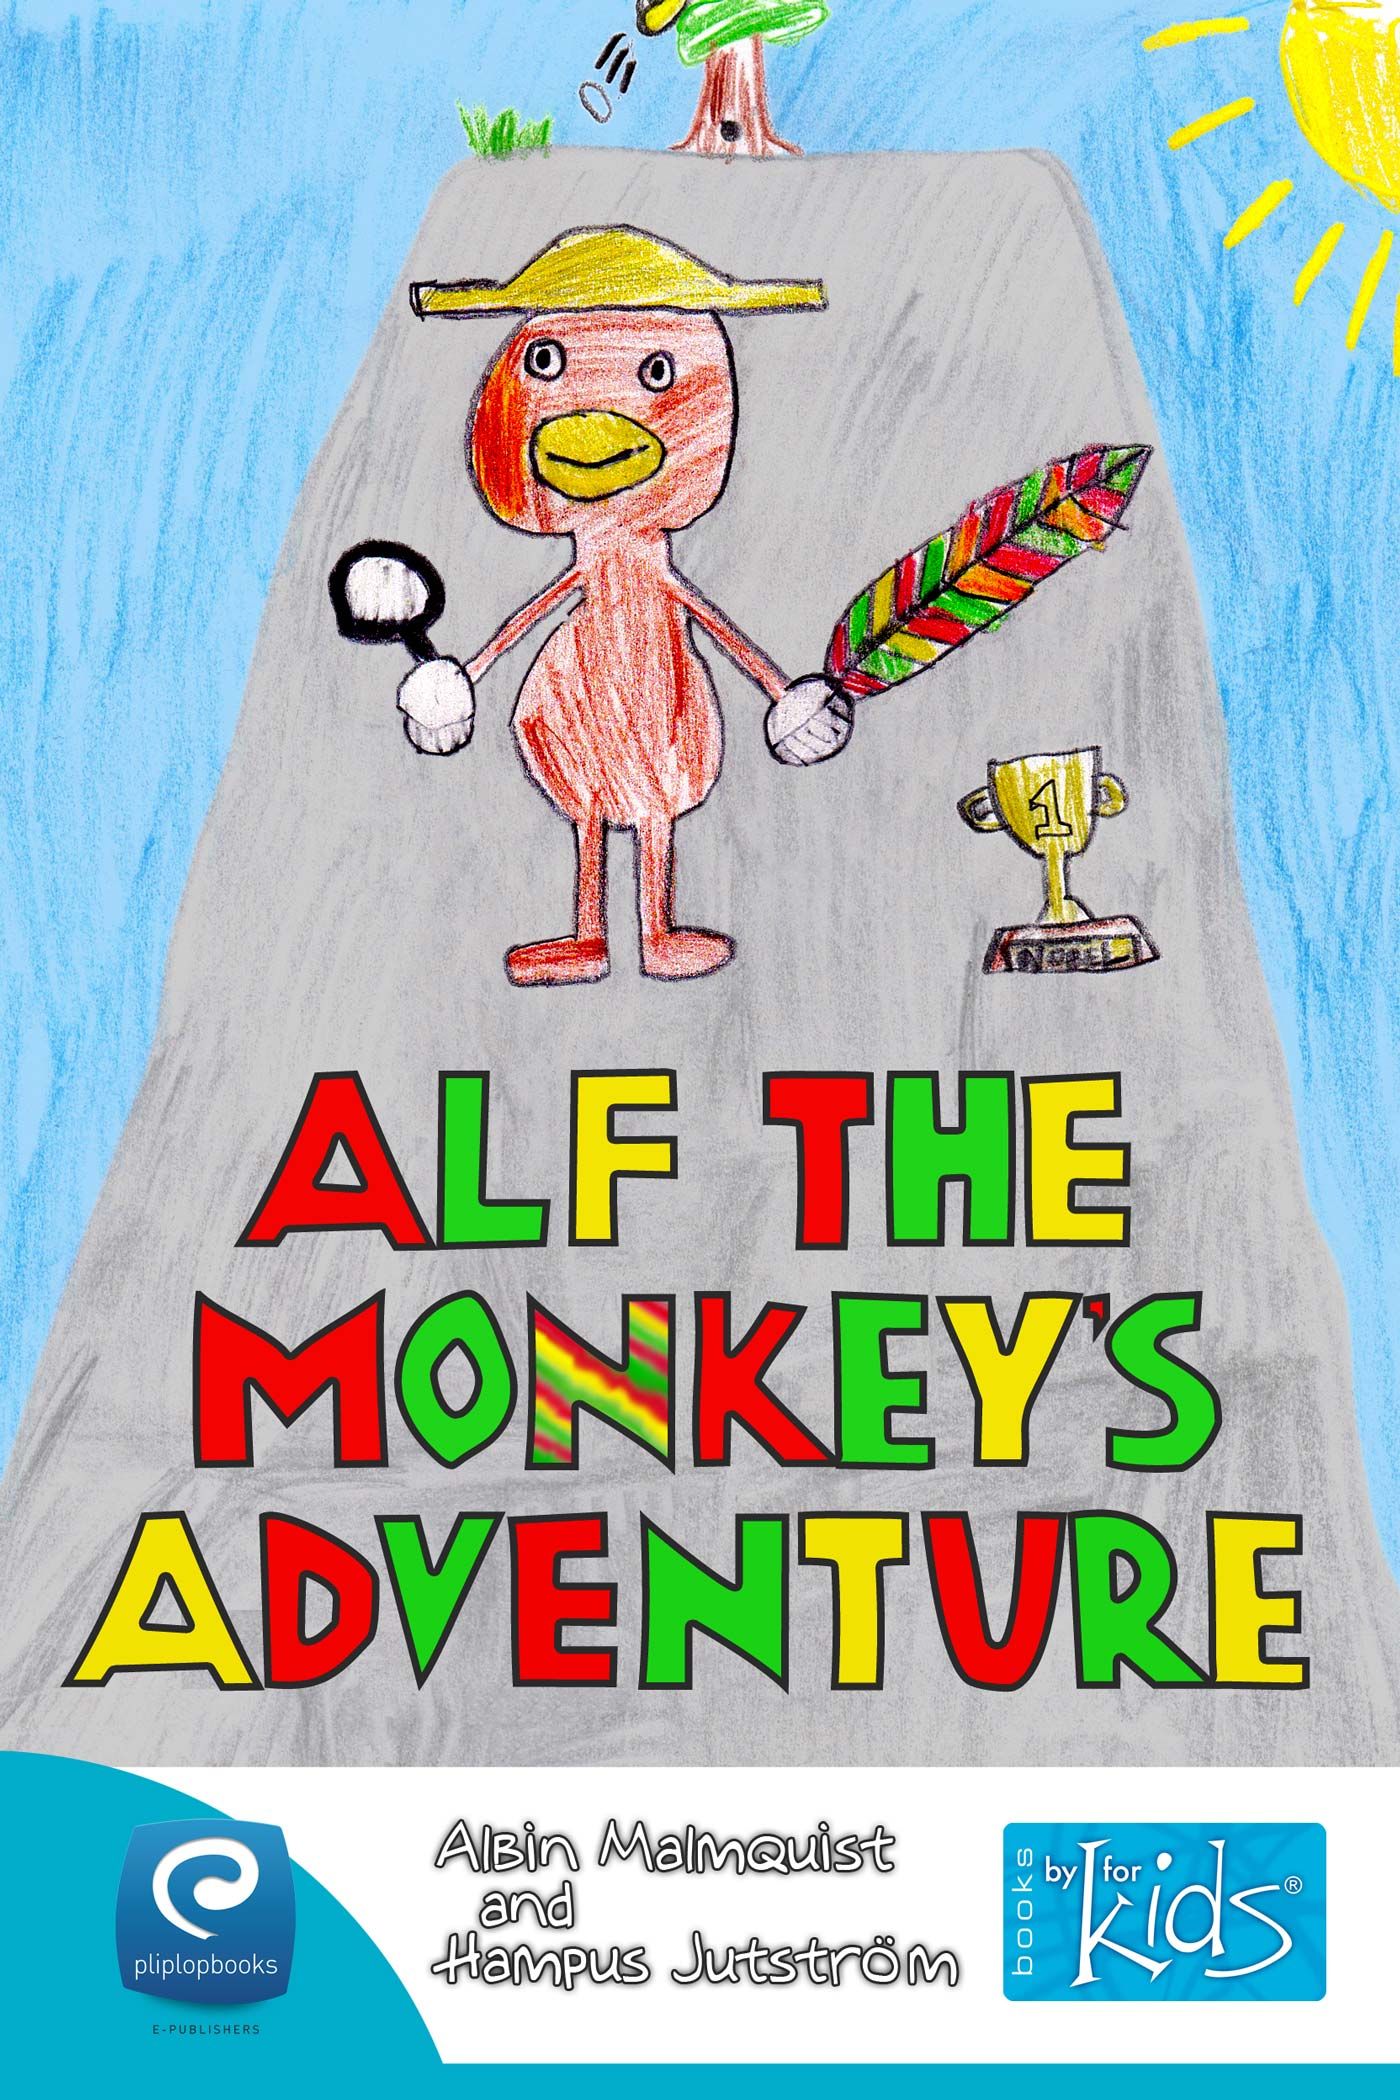 Alf the monkey's adventure, e-bok av Hampus Jutström, Albin Malmquist